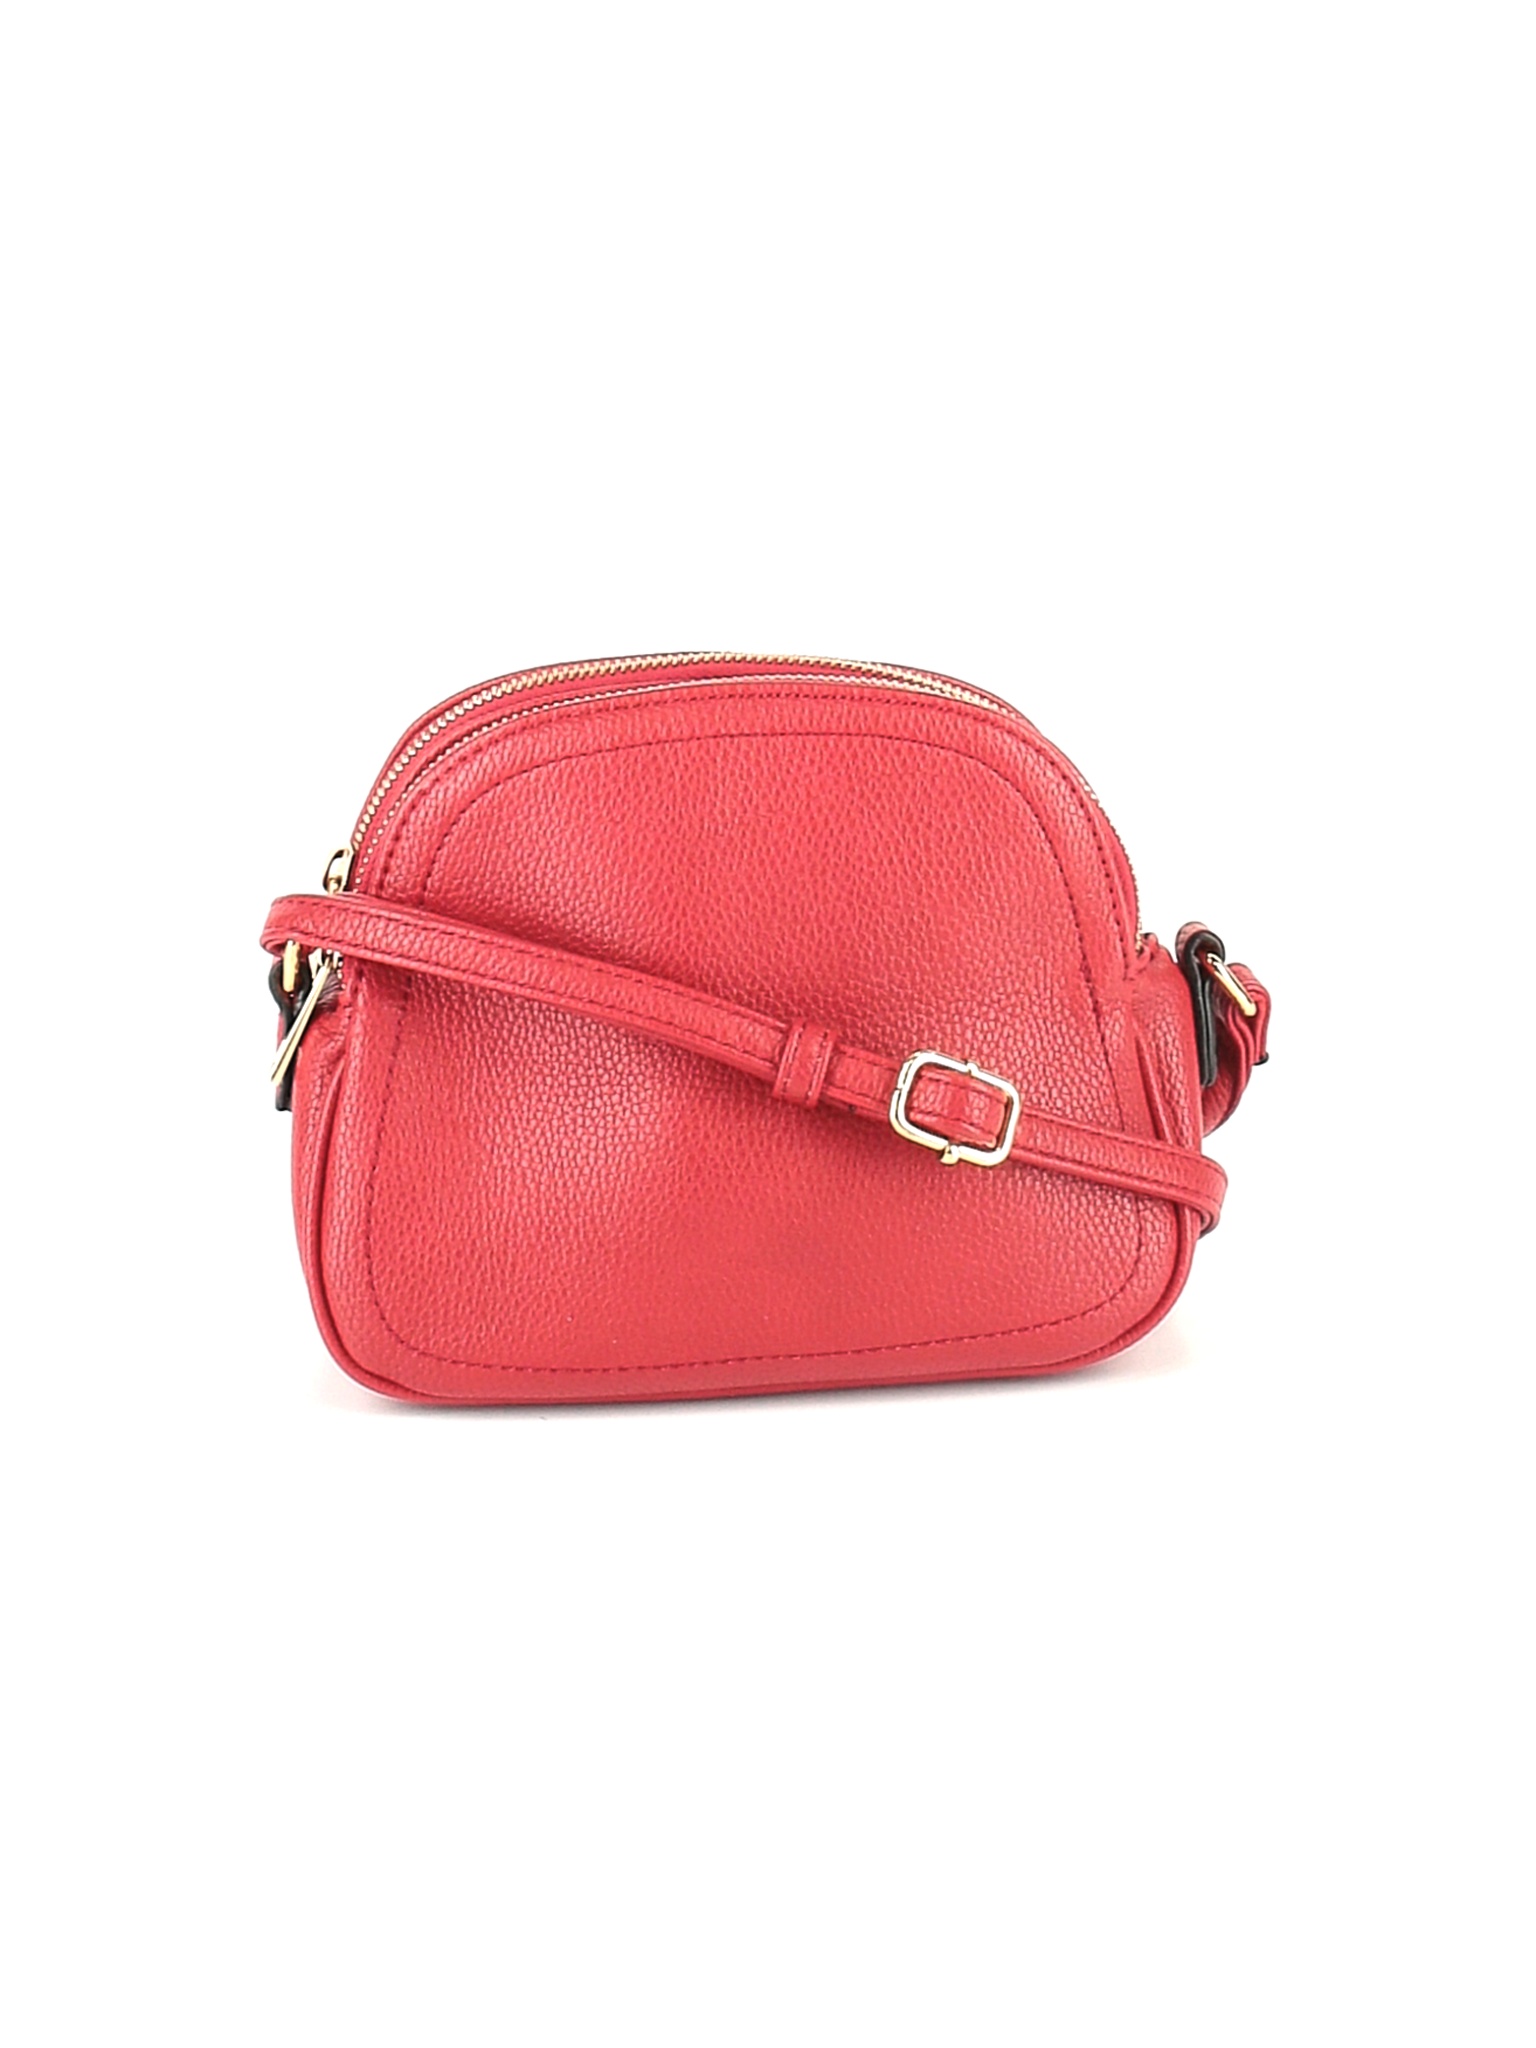 Unbranded Women Pink Crossbody Bag One Size | eBay